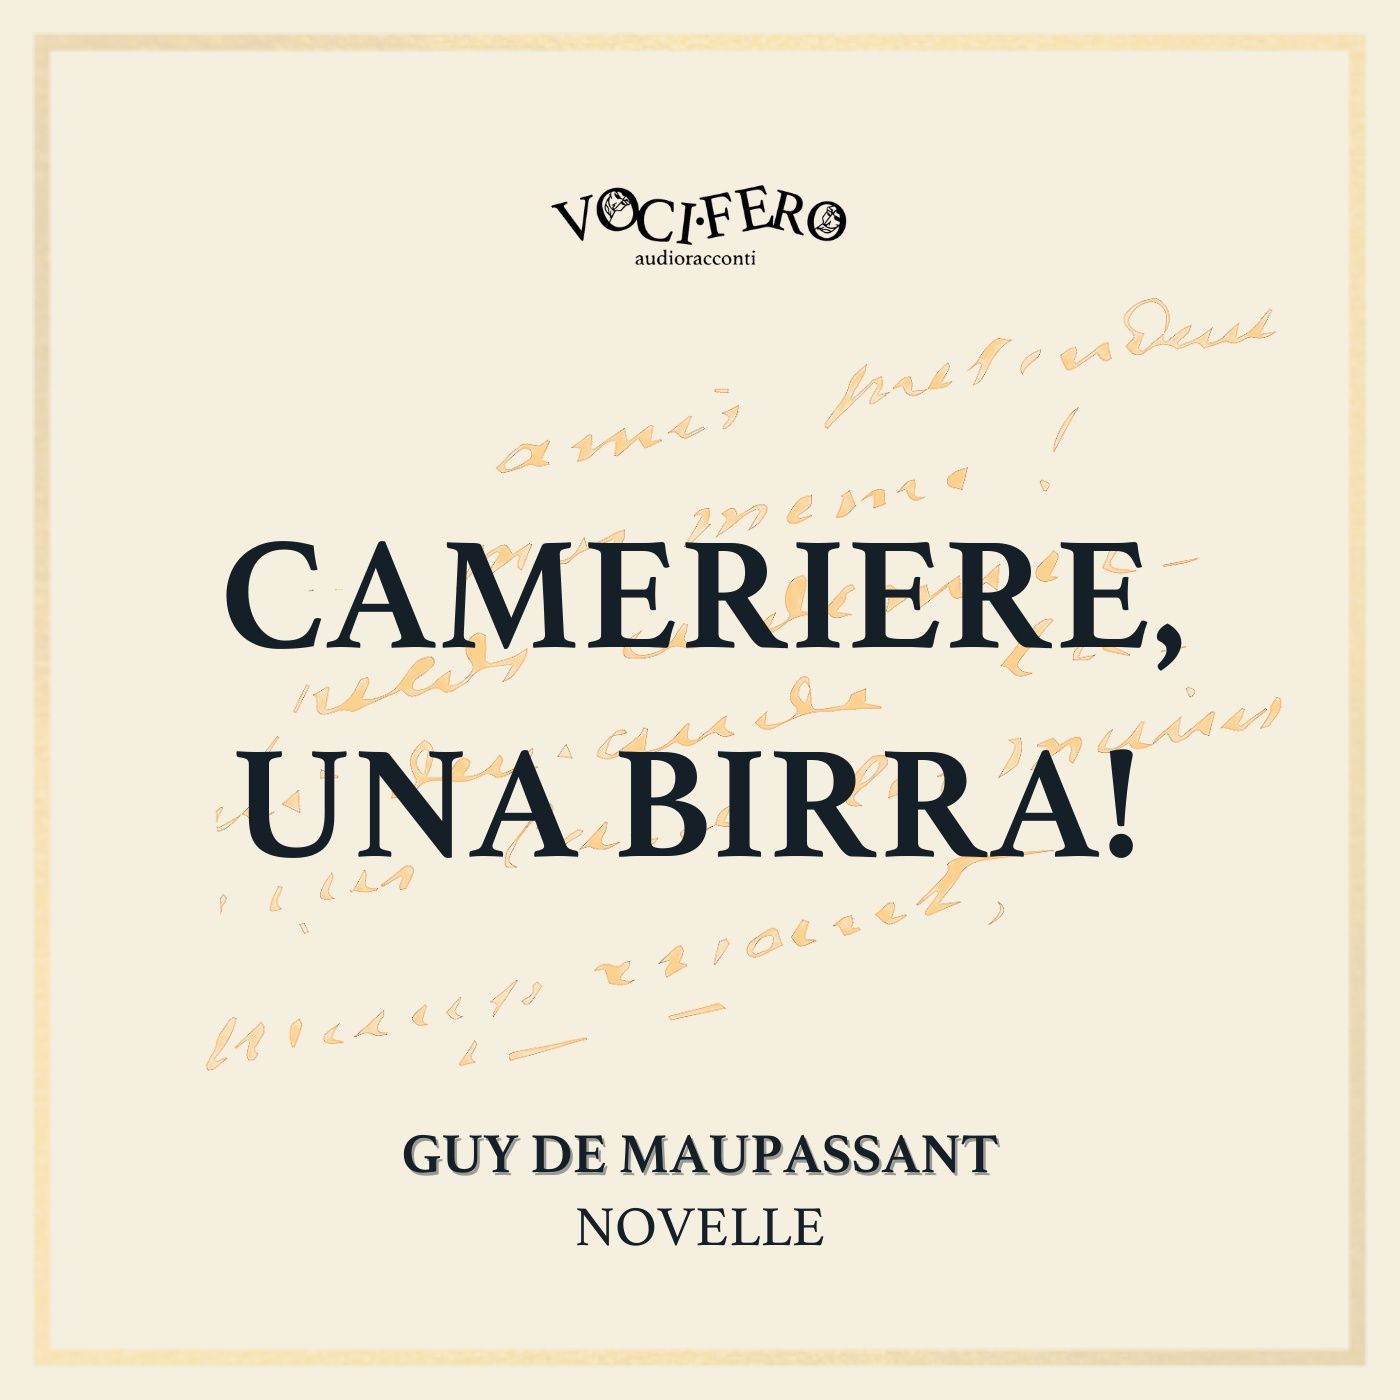 #5 Cameriere, una Birra! - Guy de Maupassant - novelle - vocifero